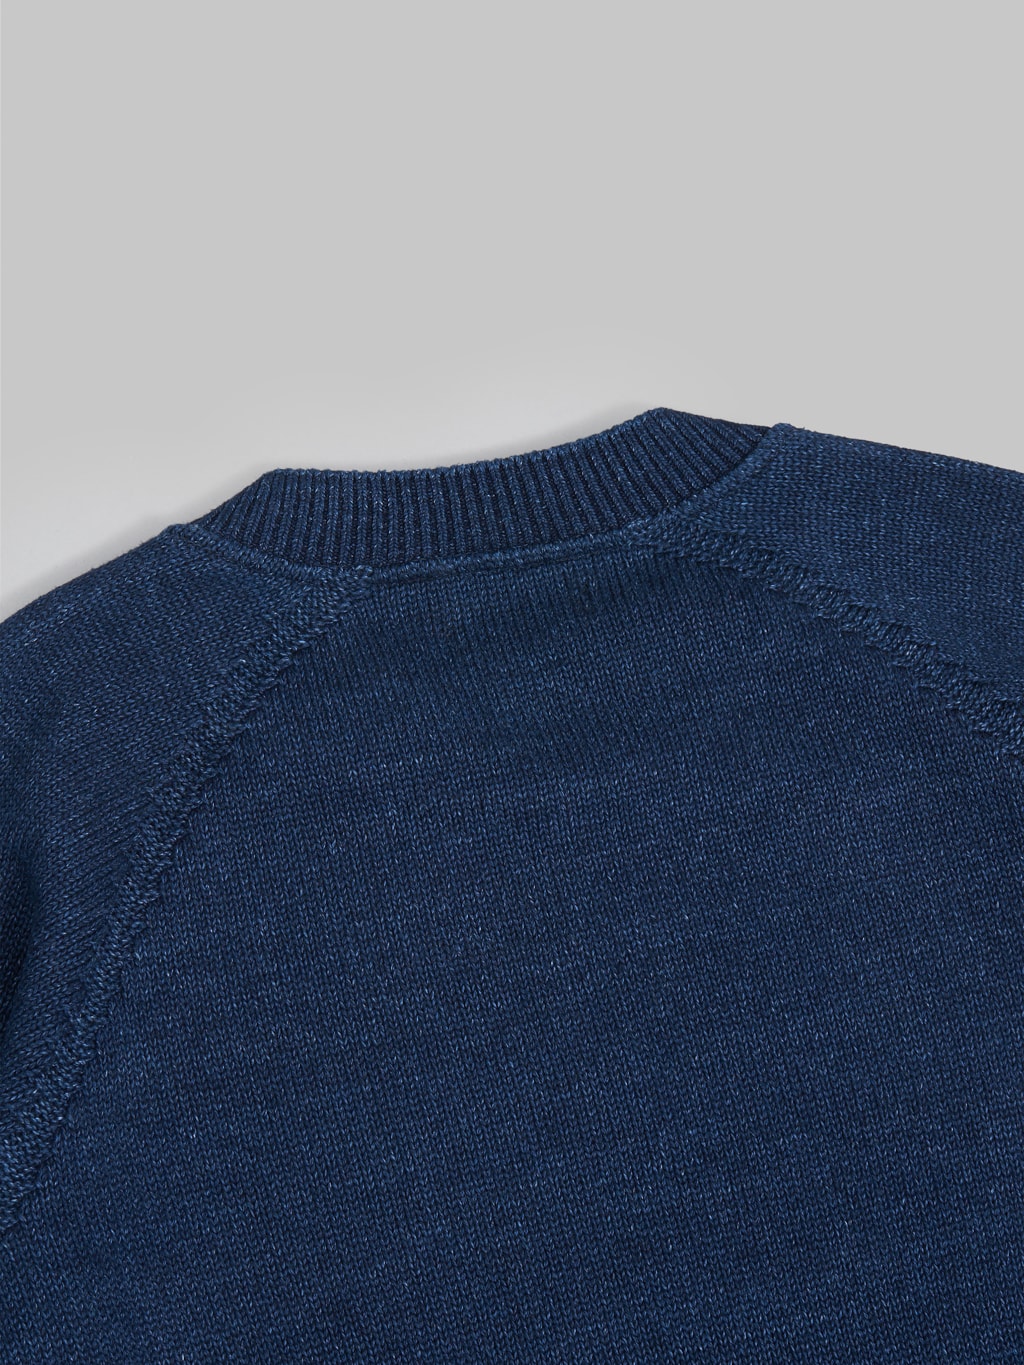 seuvas cotton raglan sweater indigo stitching